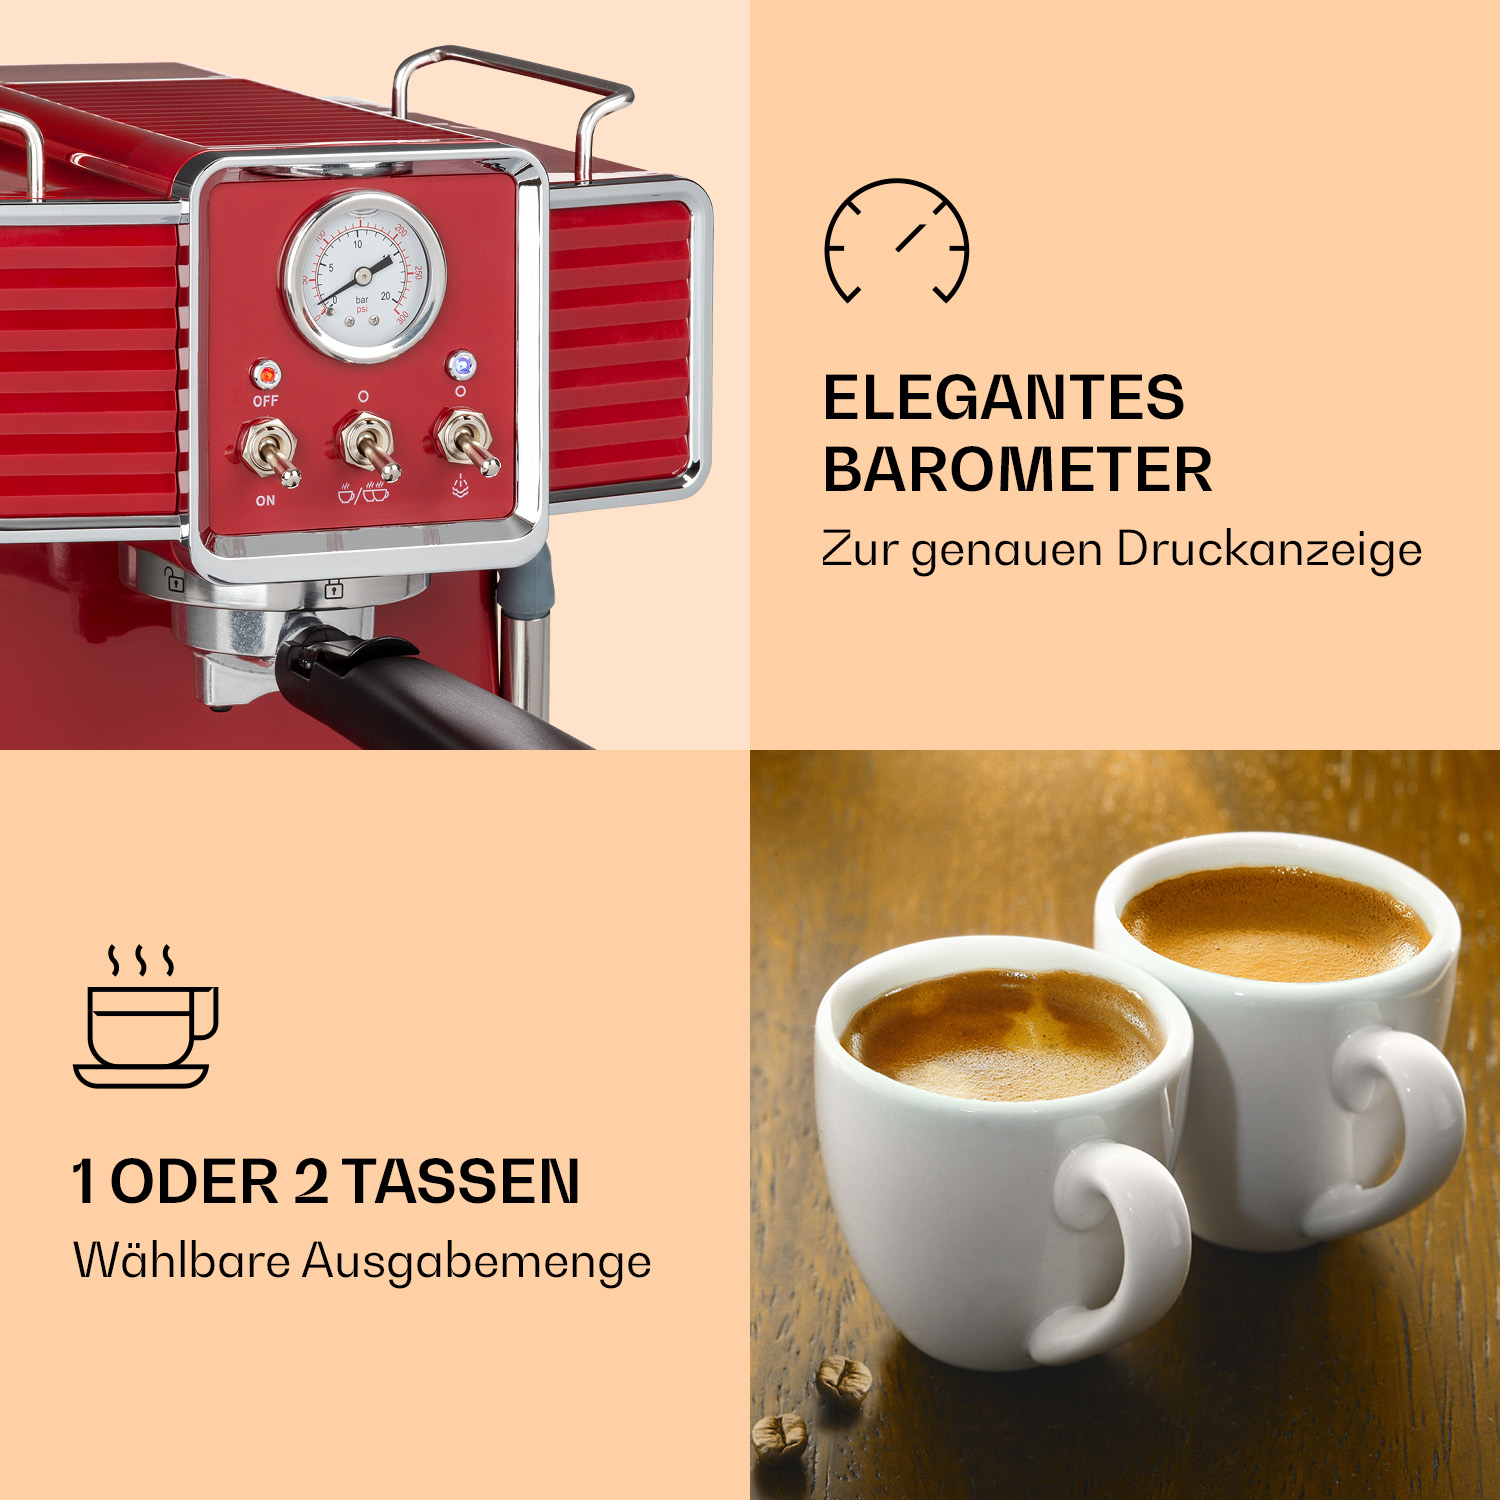 KLARSTEIN Gusto Classico Espressomaker Espressomaschine Rot